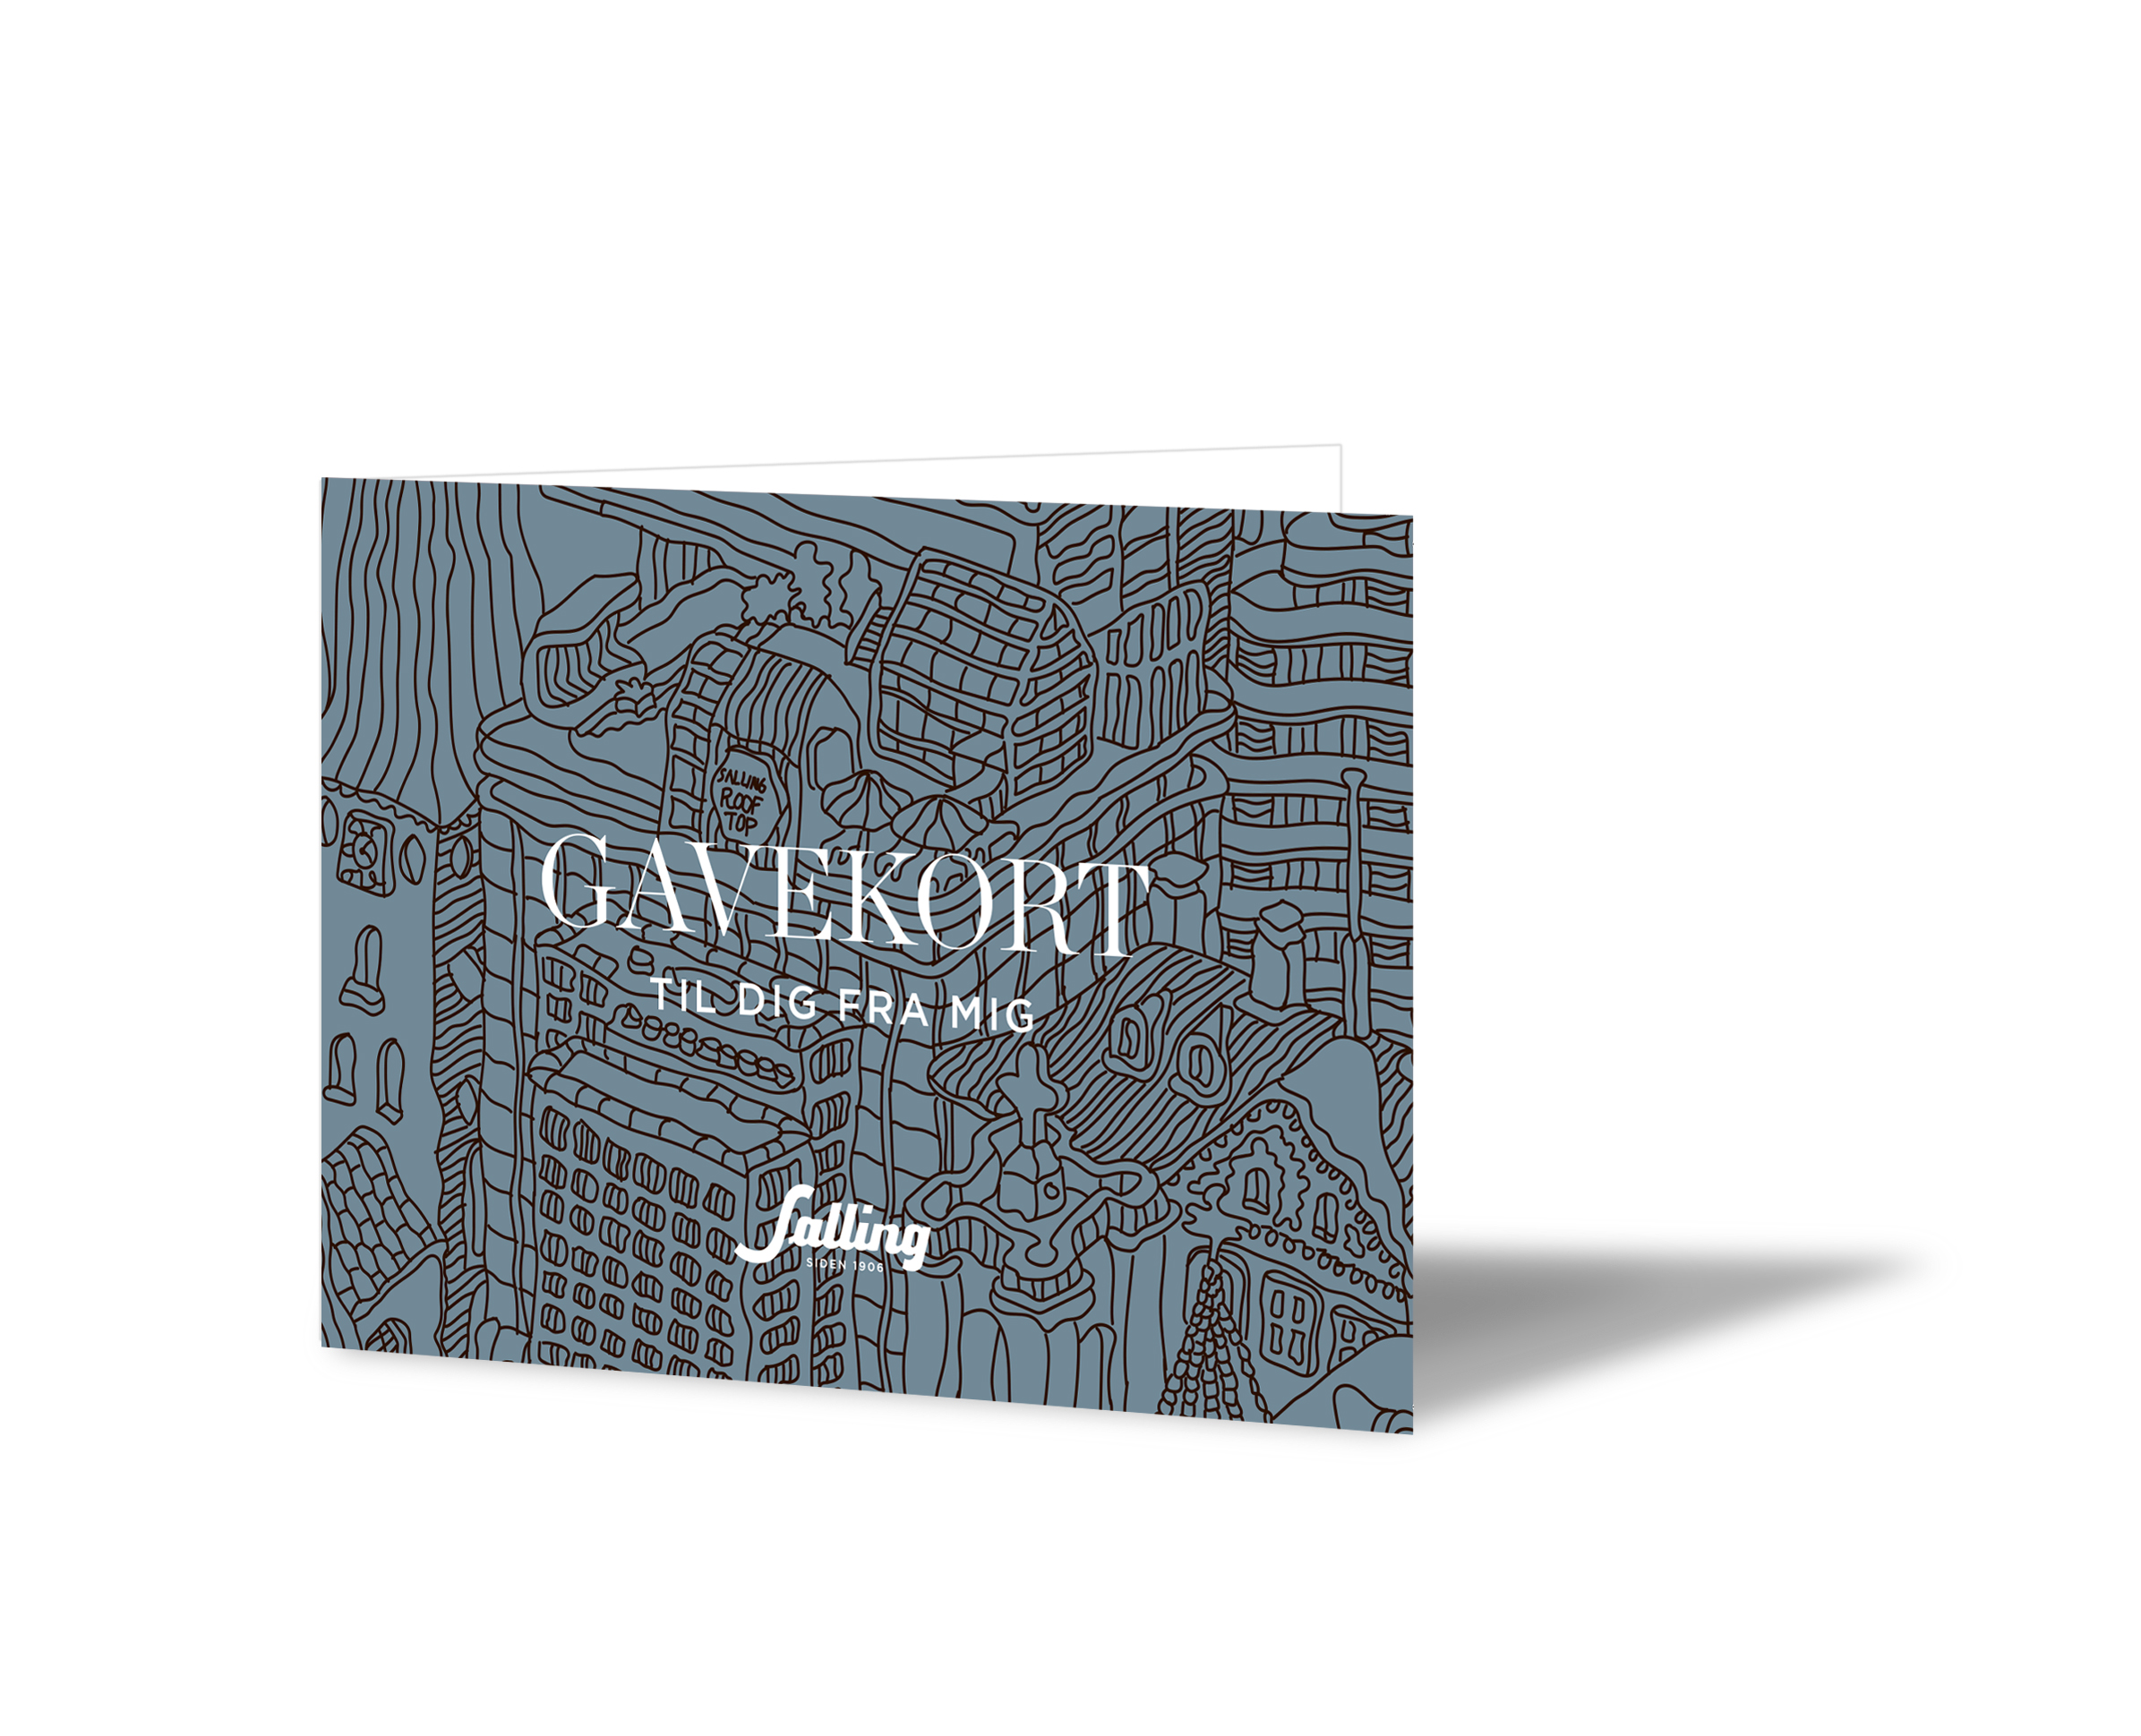 Salling Digitalt Gavekort - 1900 kr